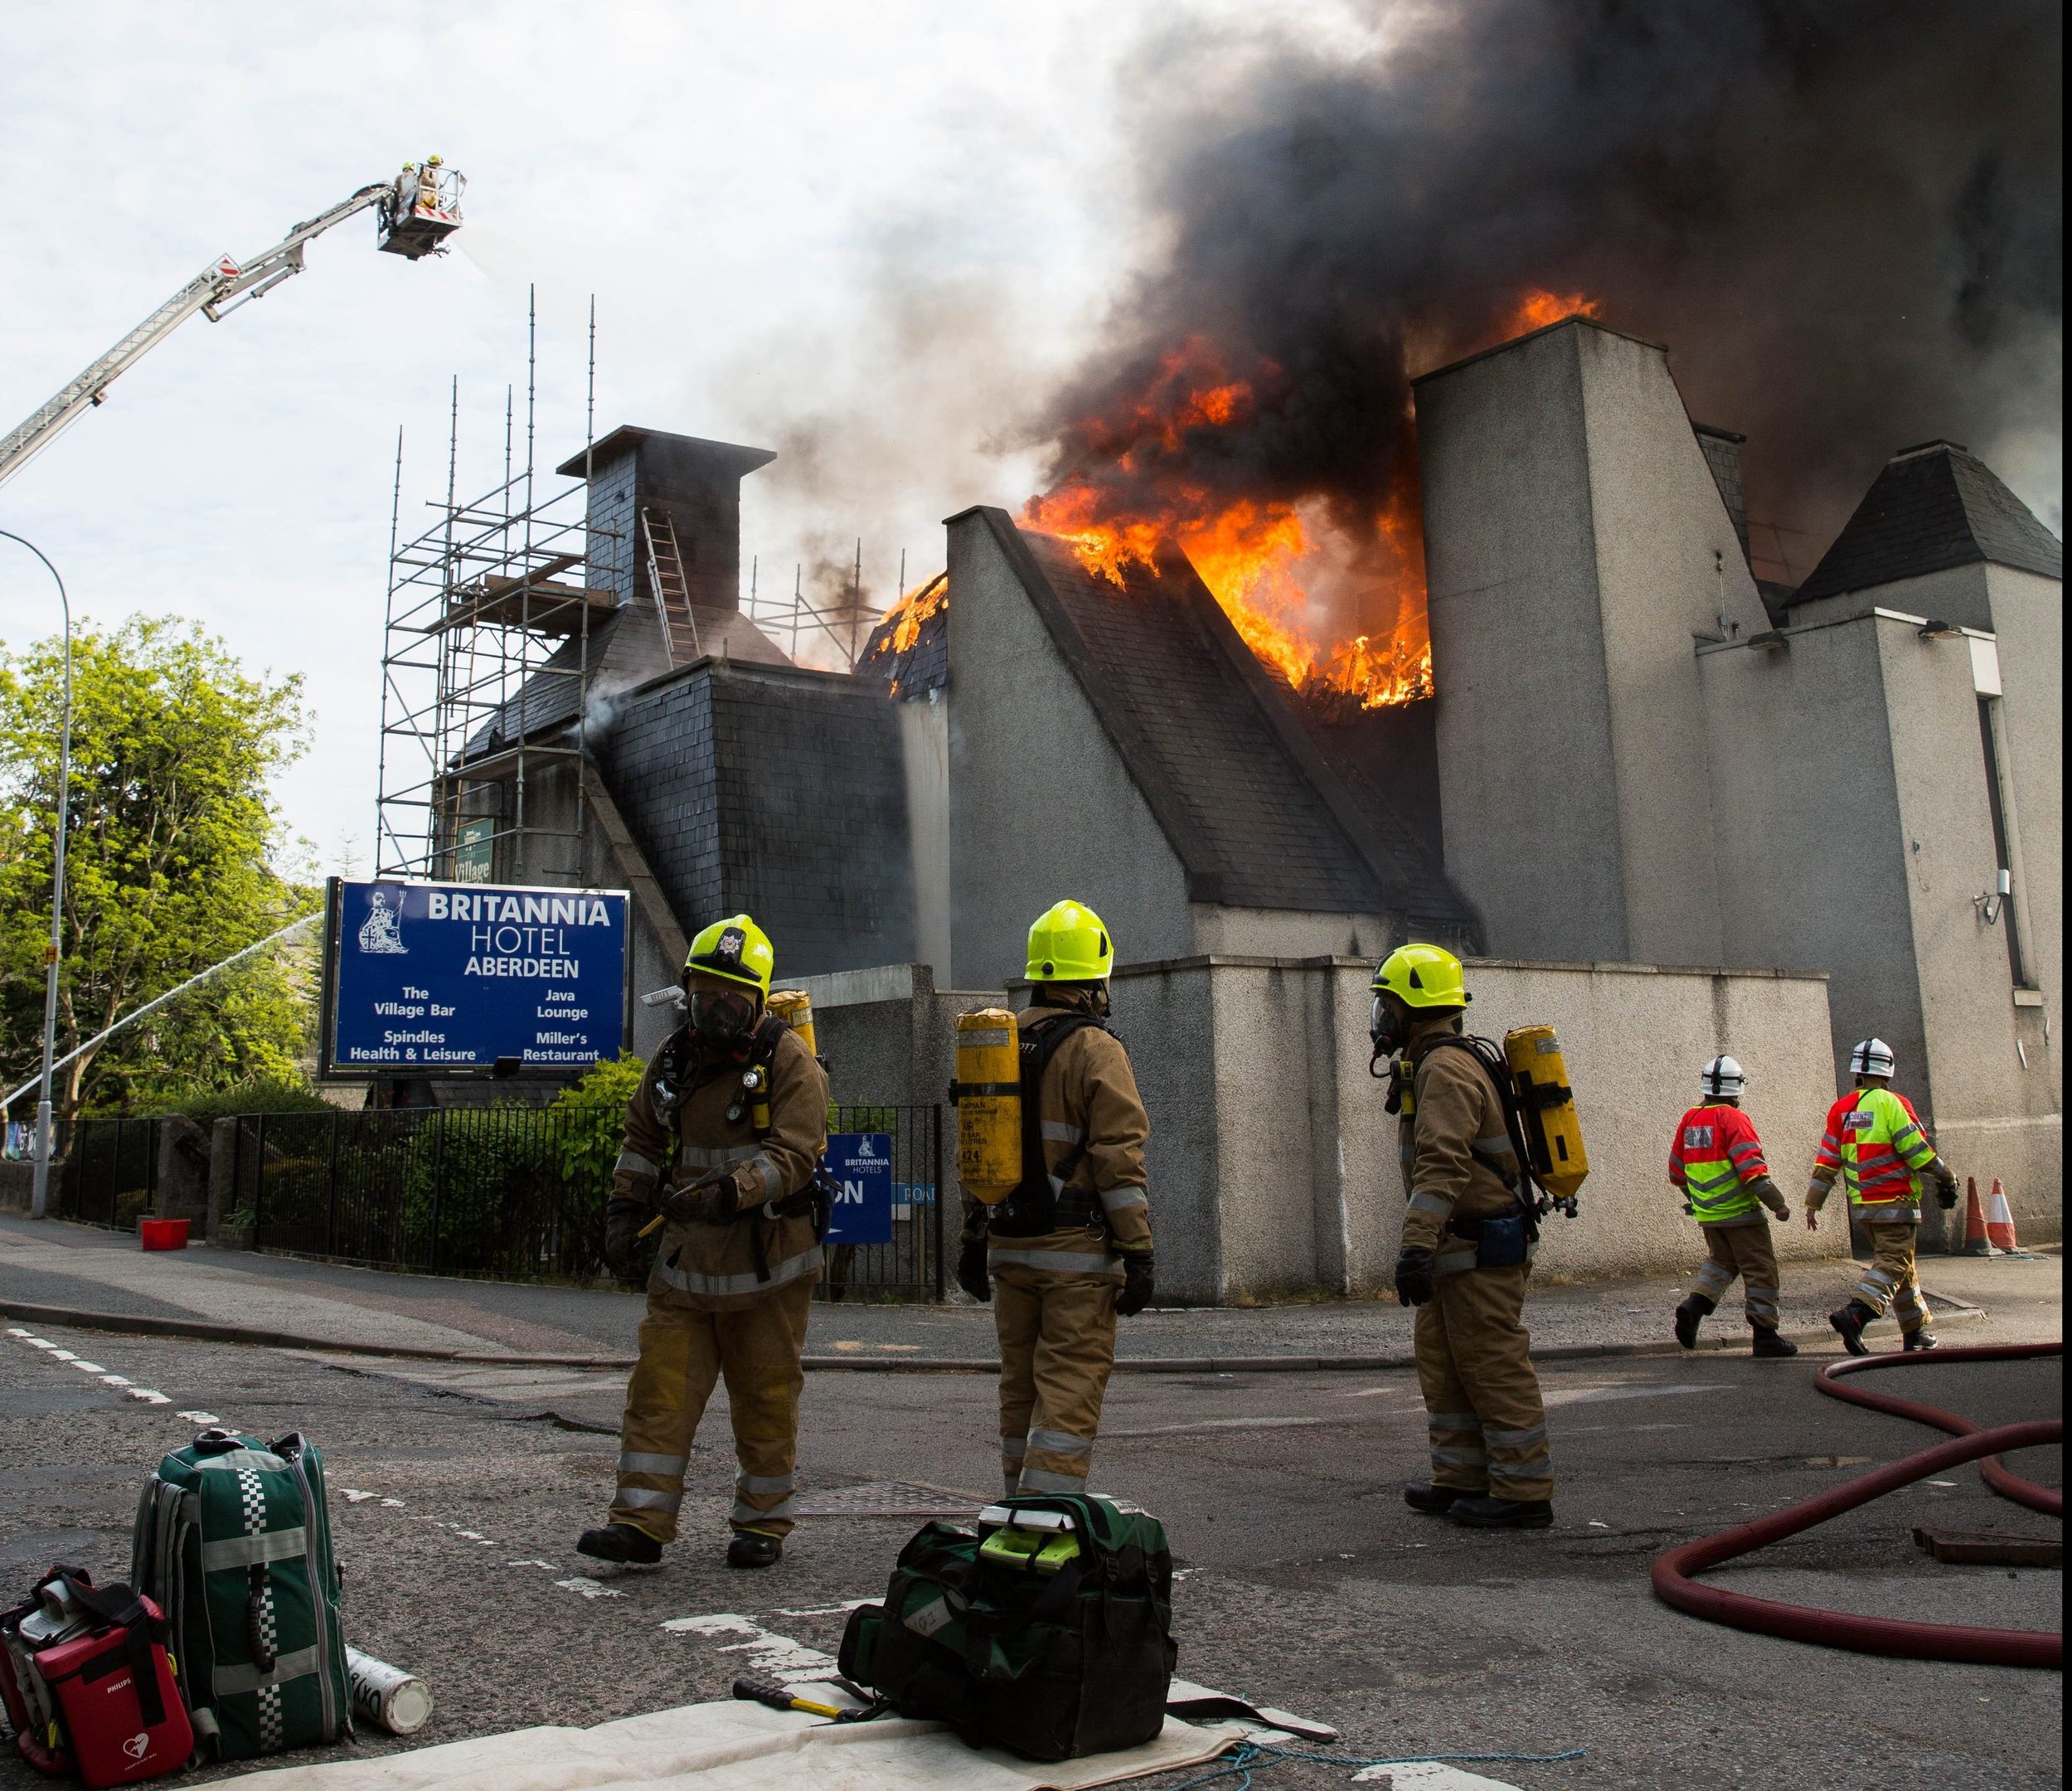 More than 50 firefighters battled the serious blaze at an Aberdeen hotel.